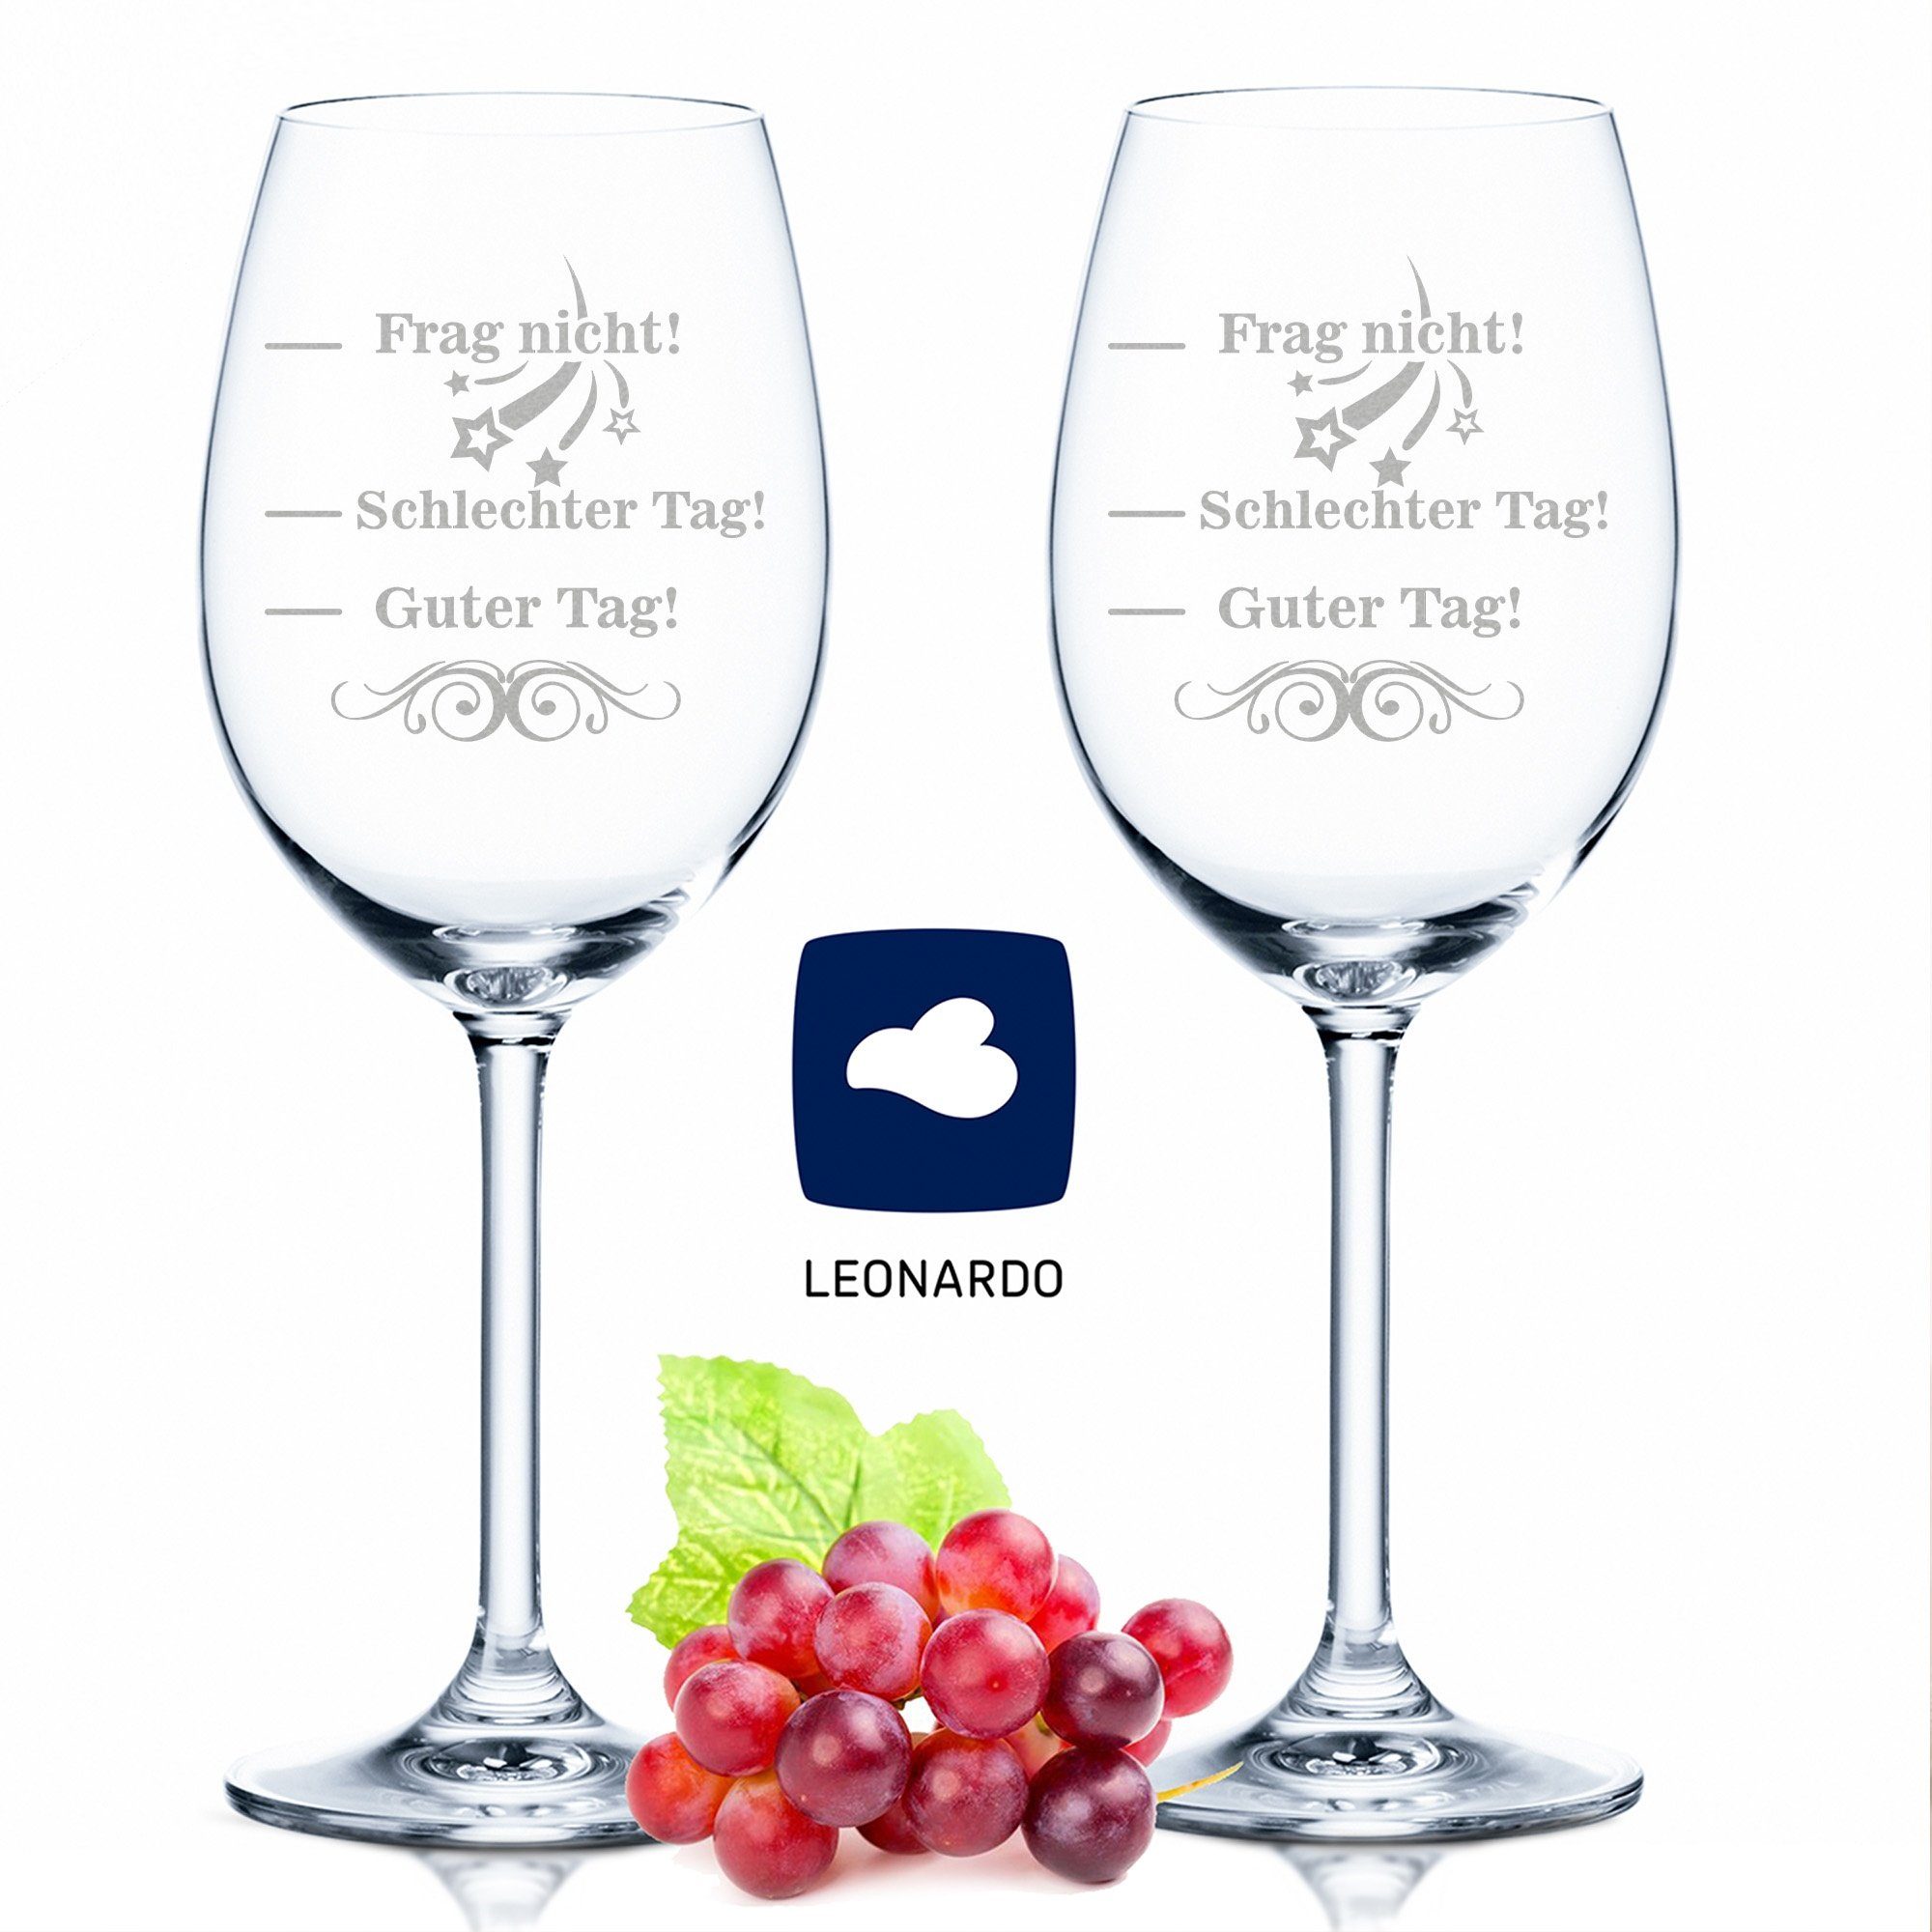 LEONARDO Rotweinglas 2x Leonardo XL Weinglas Schlechter Tag, Guter Tag - Frag nicht! V3, Glas